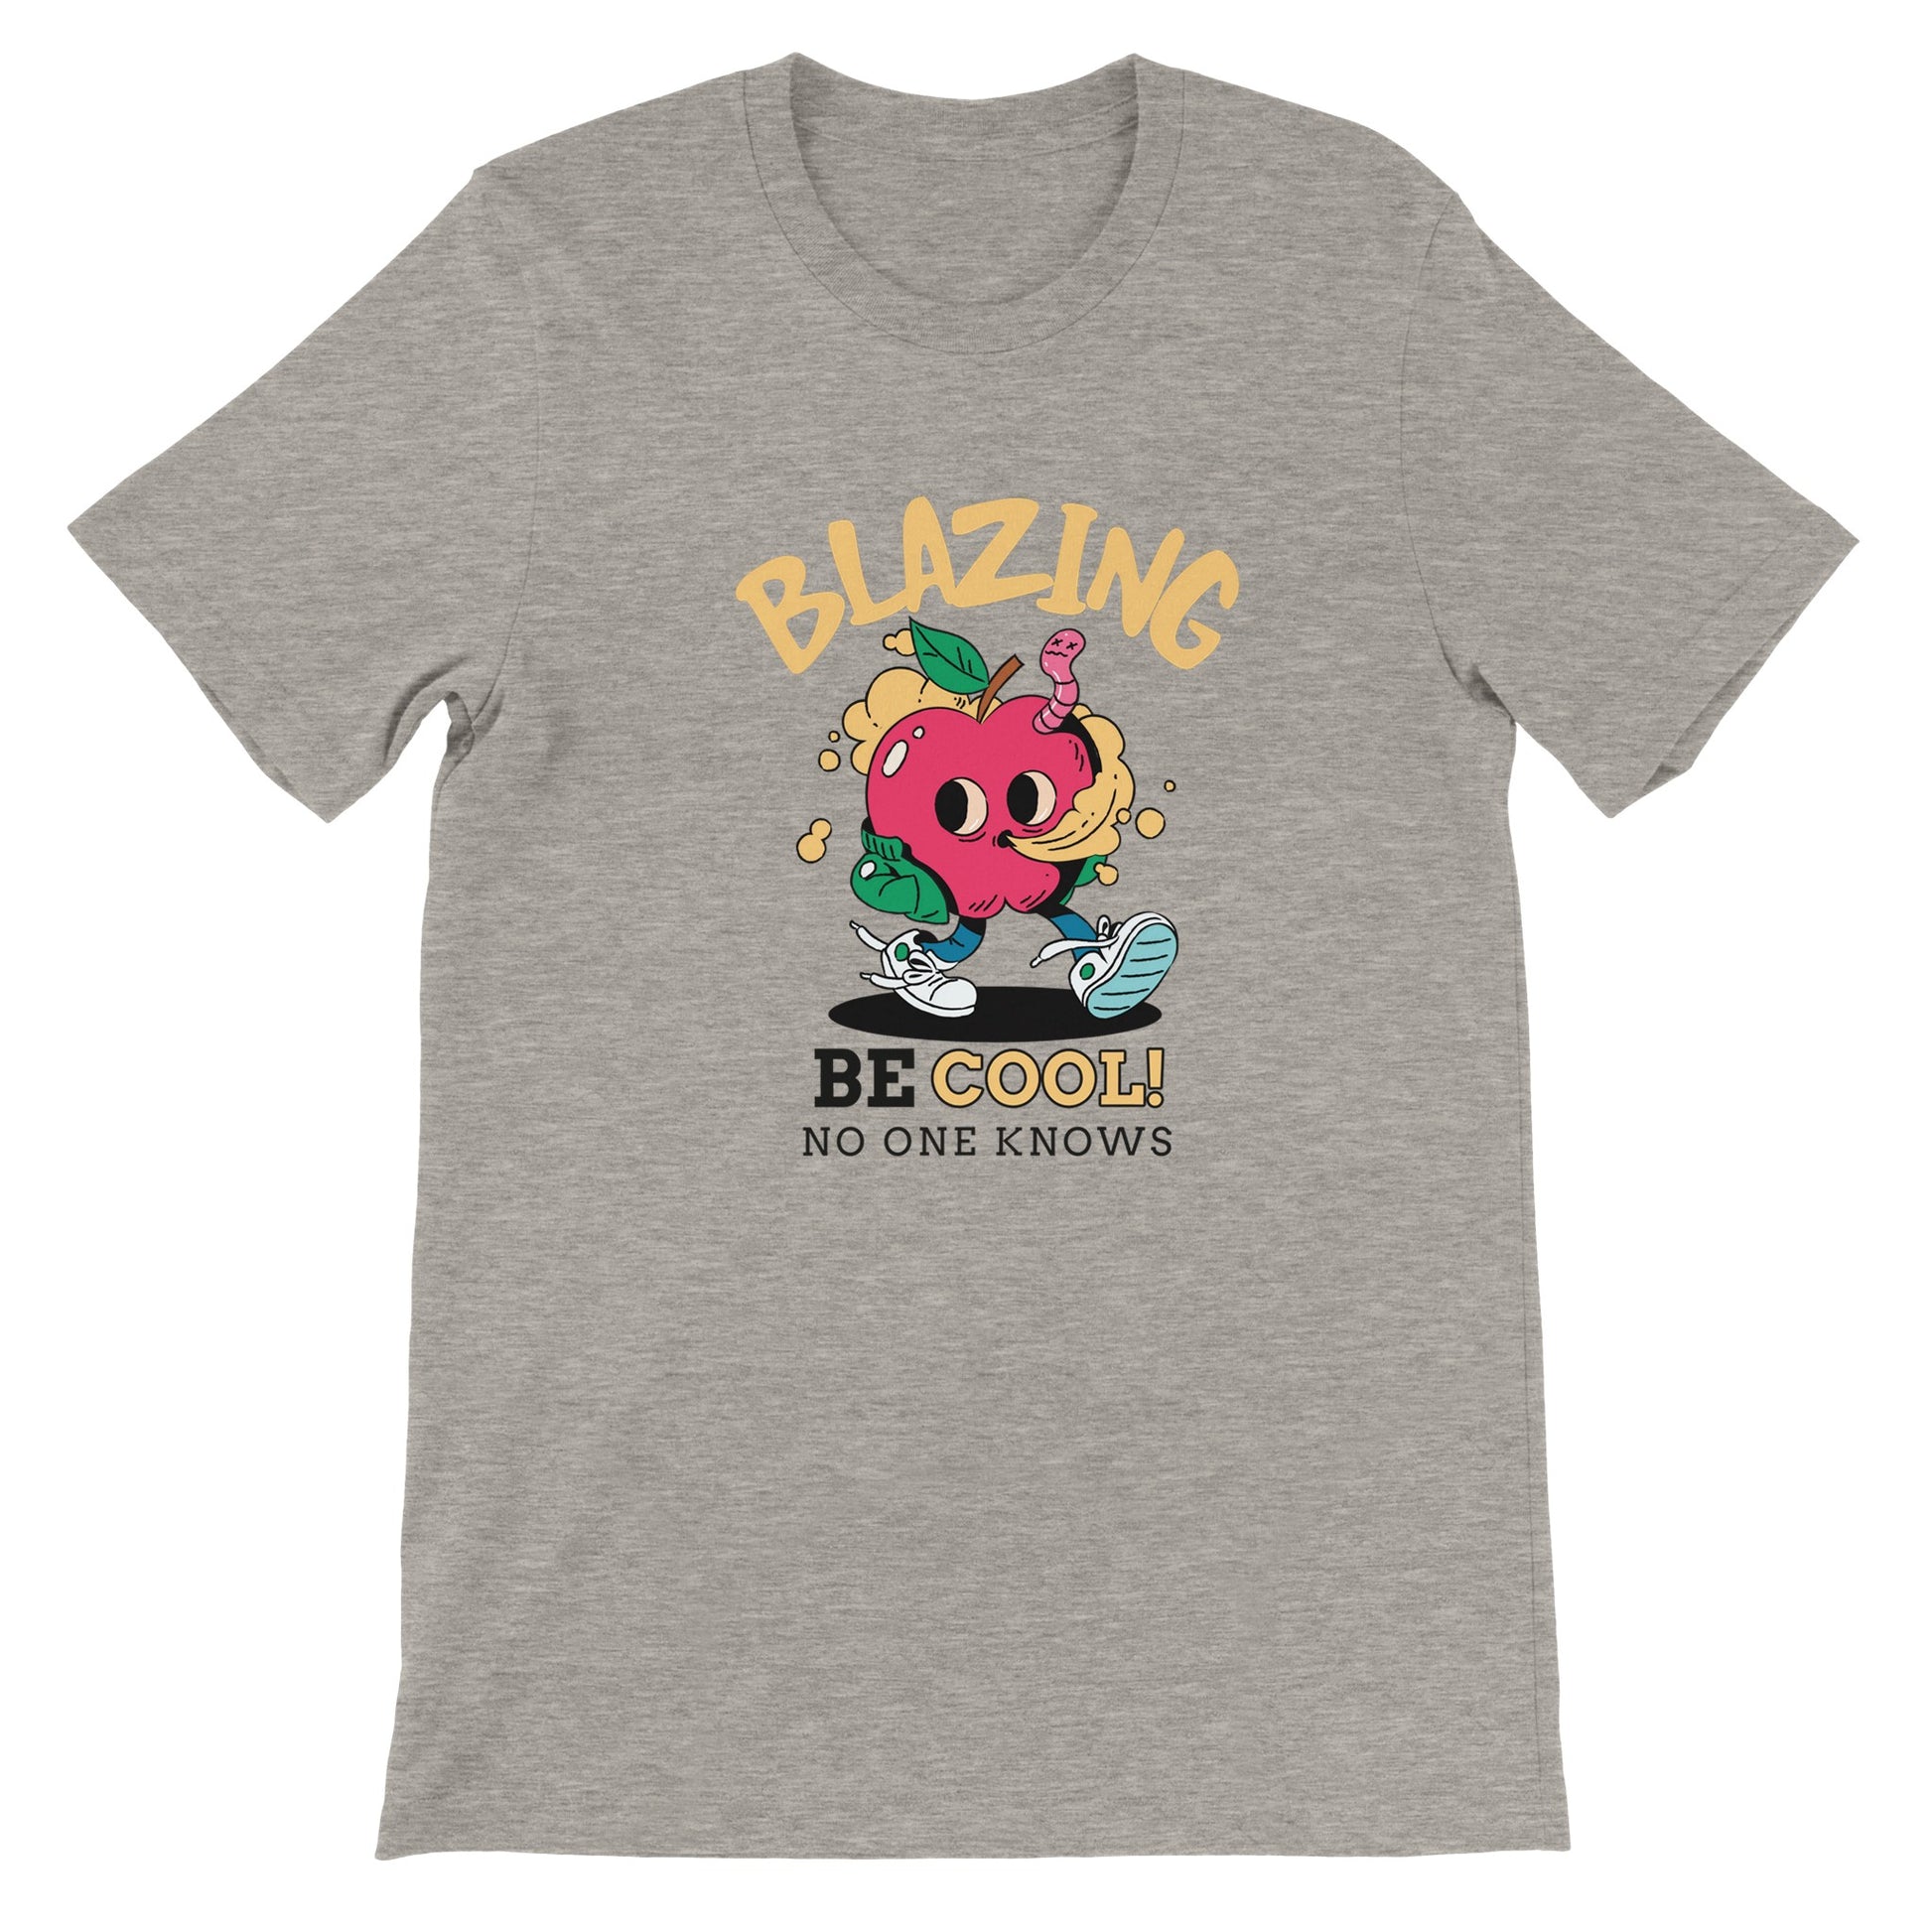 Blazing apple T-shirt dankweedtees